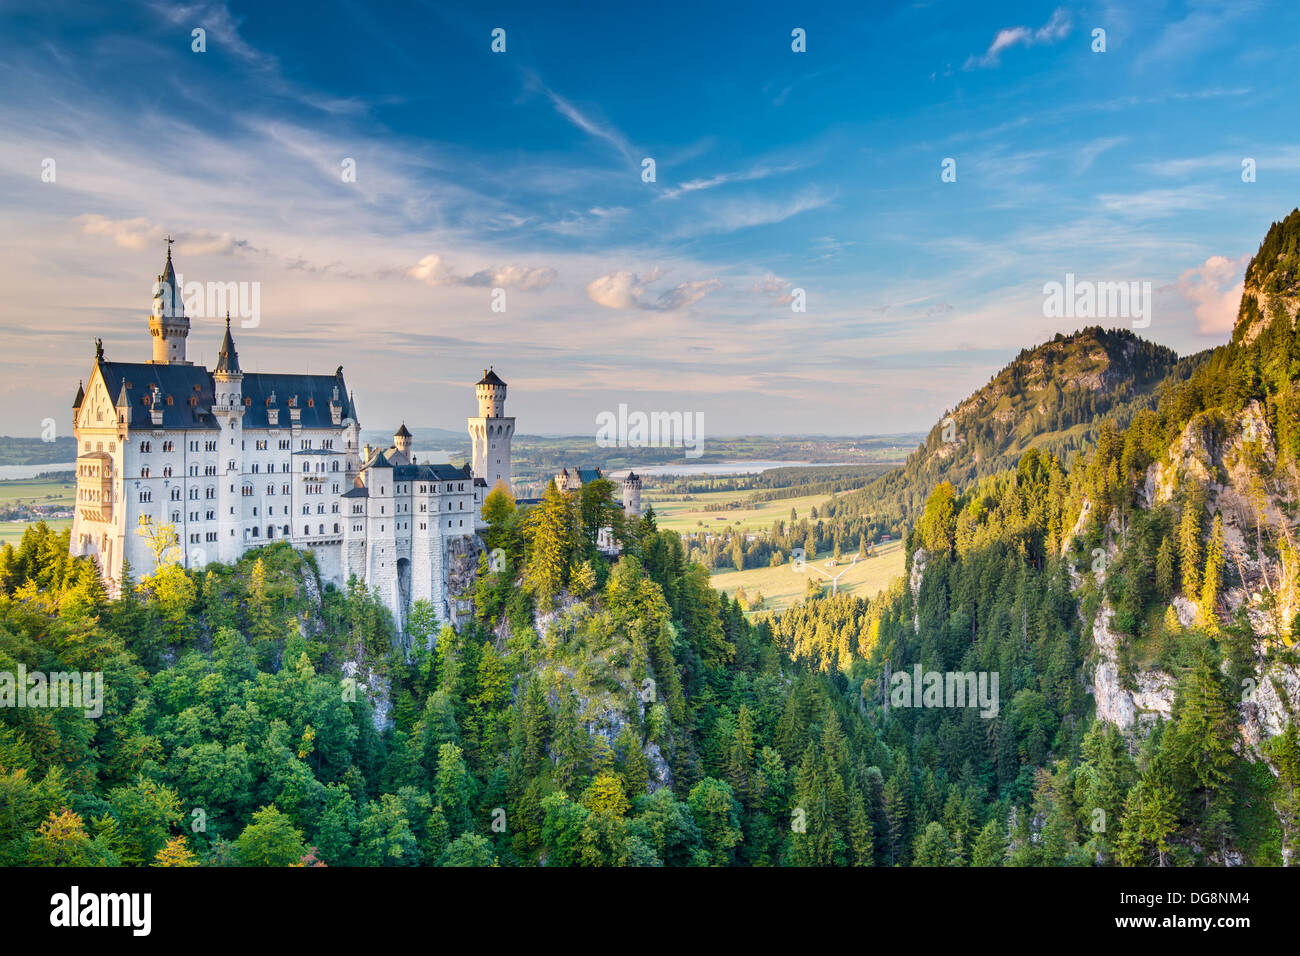 Neuschwanstein Castle in the Bavarian Alps of Germany. Stock Photo